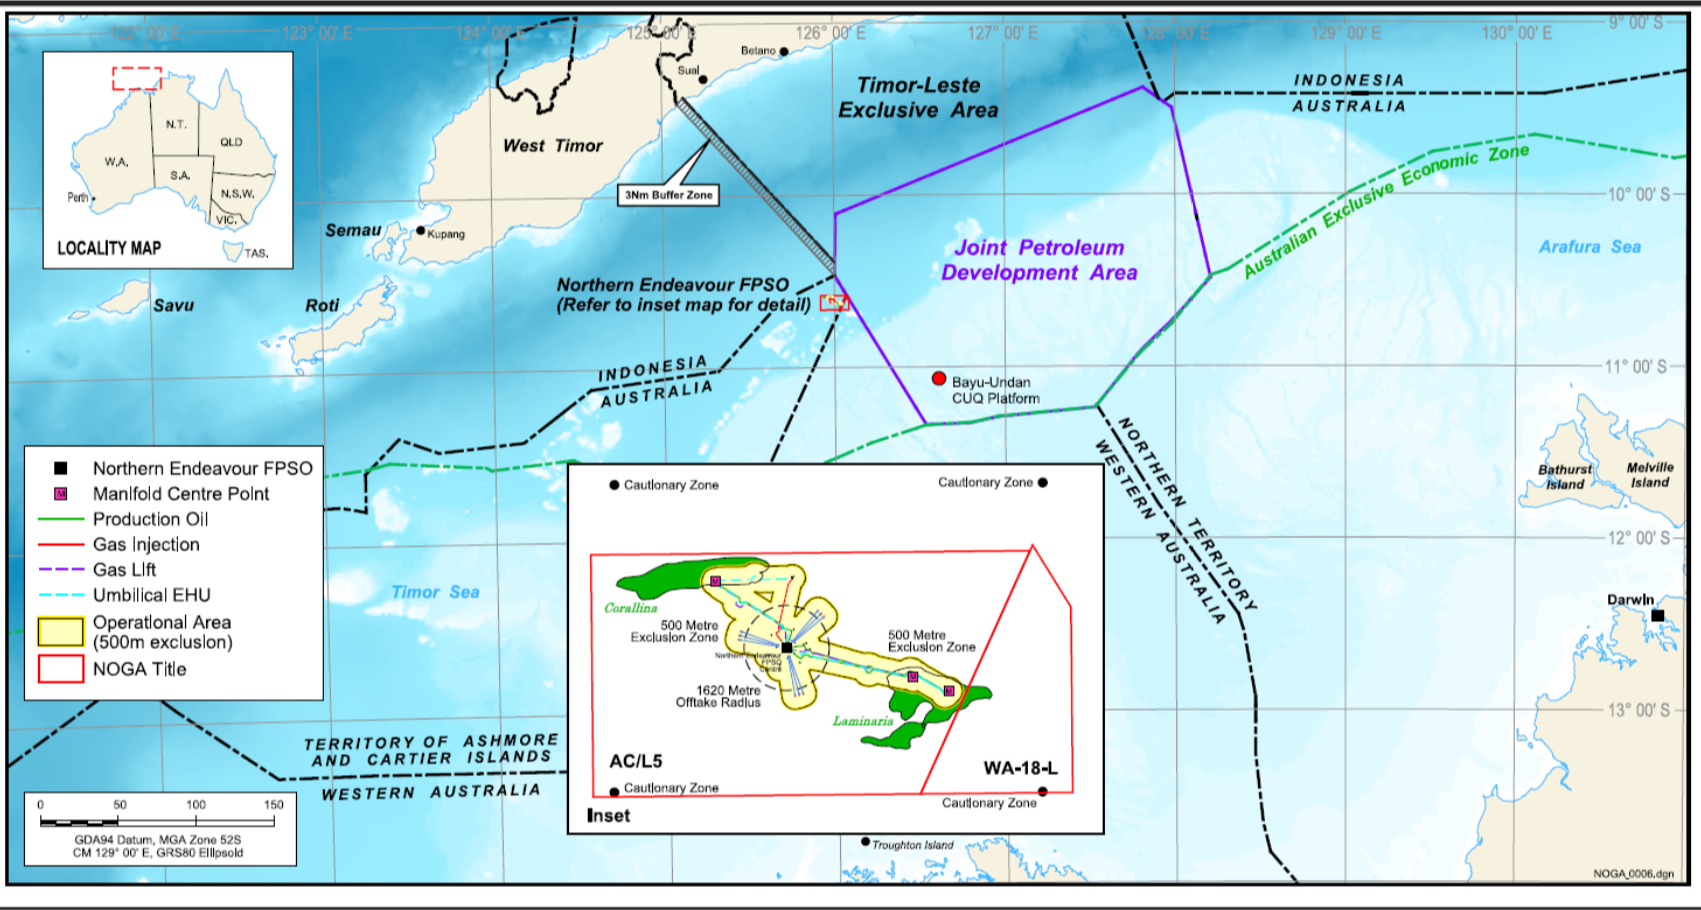 Project map - Laminaria and Corallina Fields Development (refer to Description)